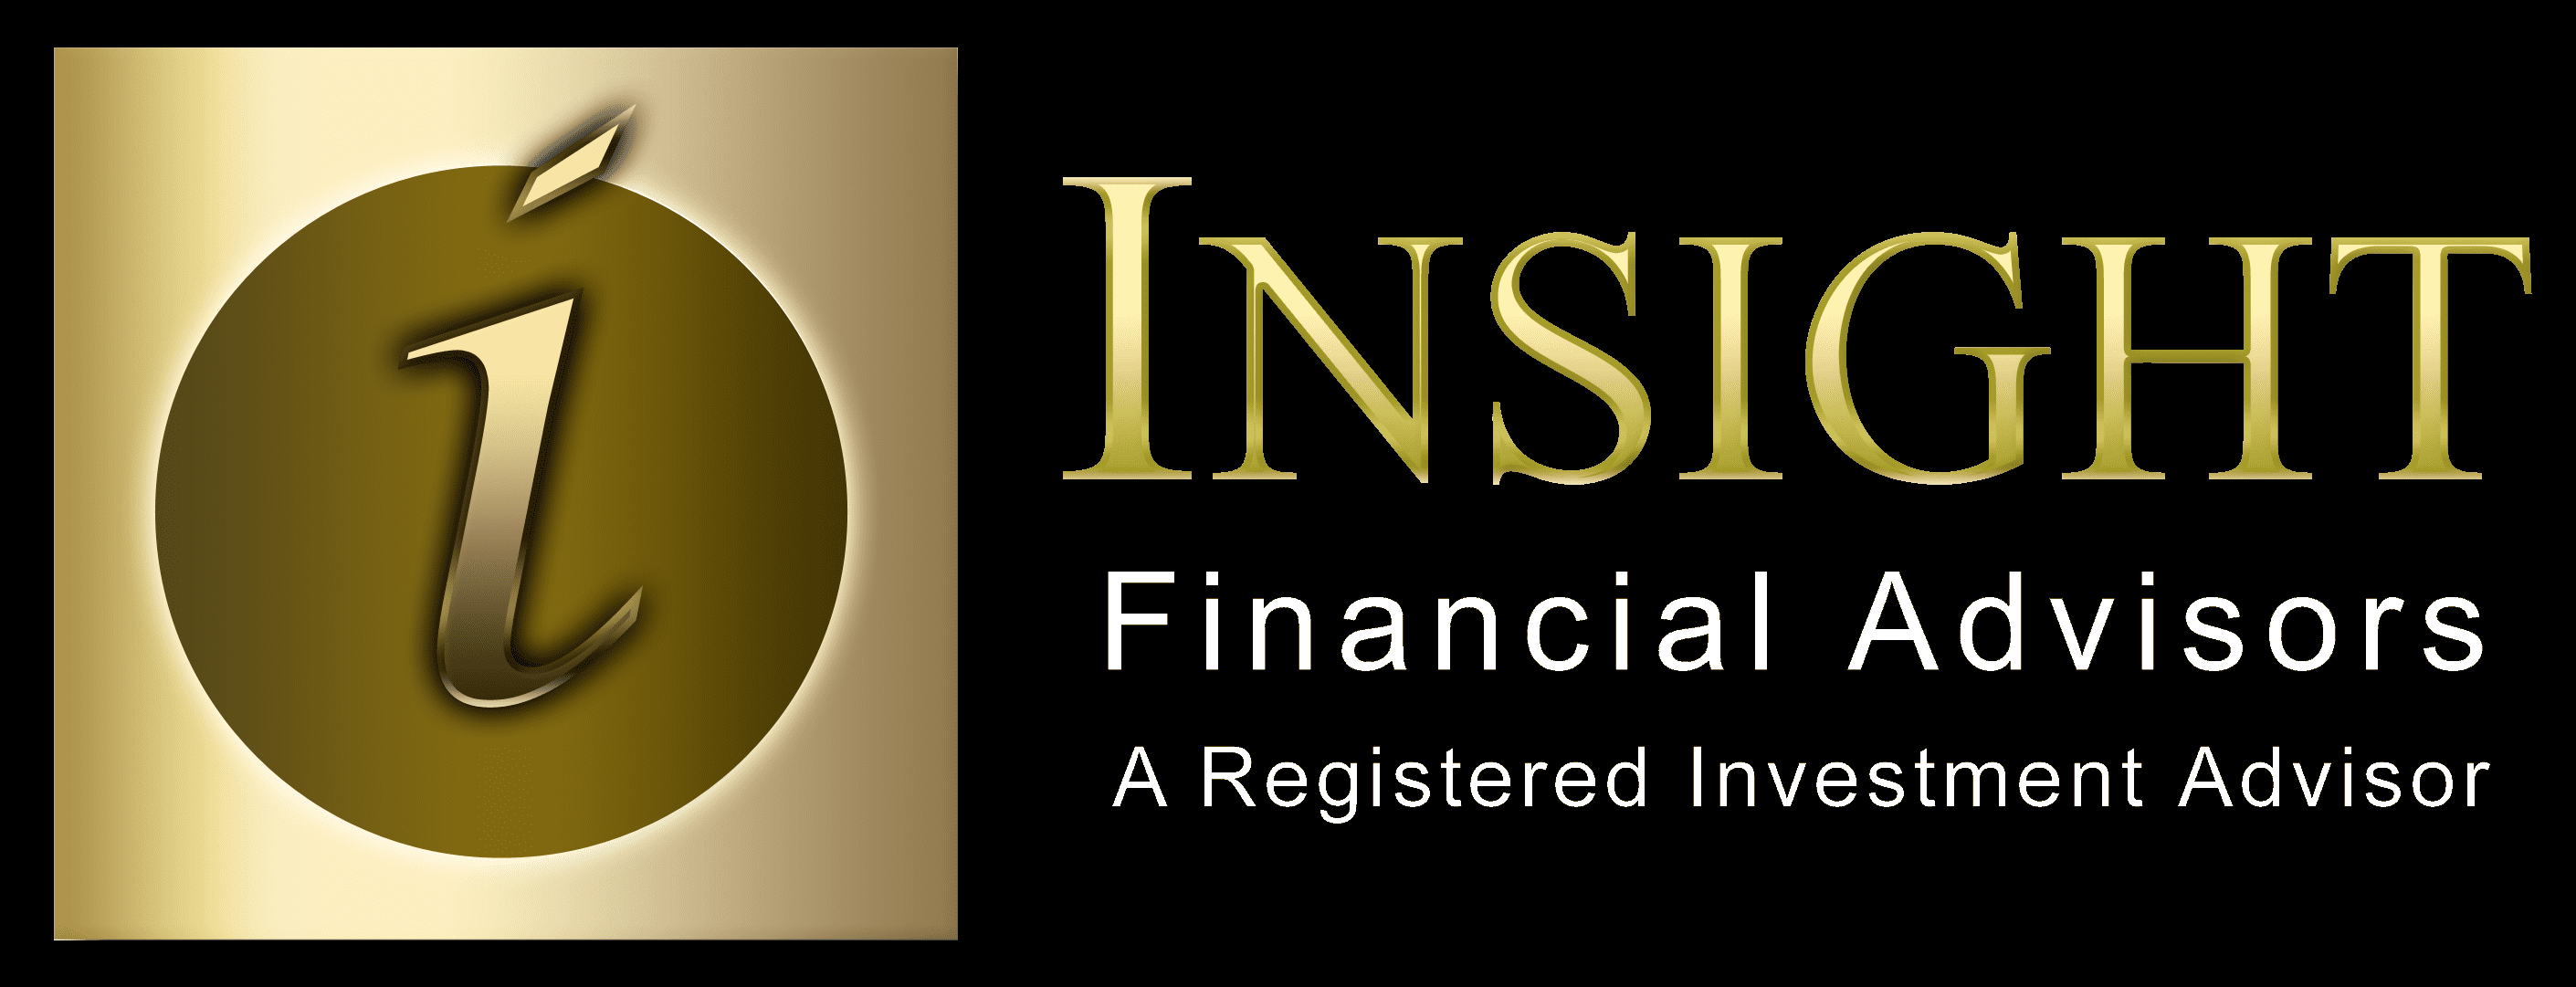 Insight Financial